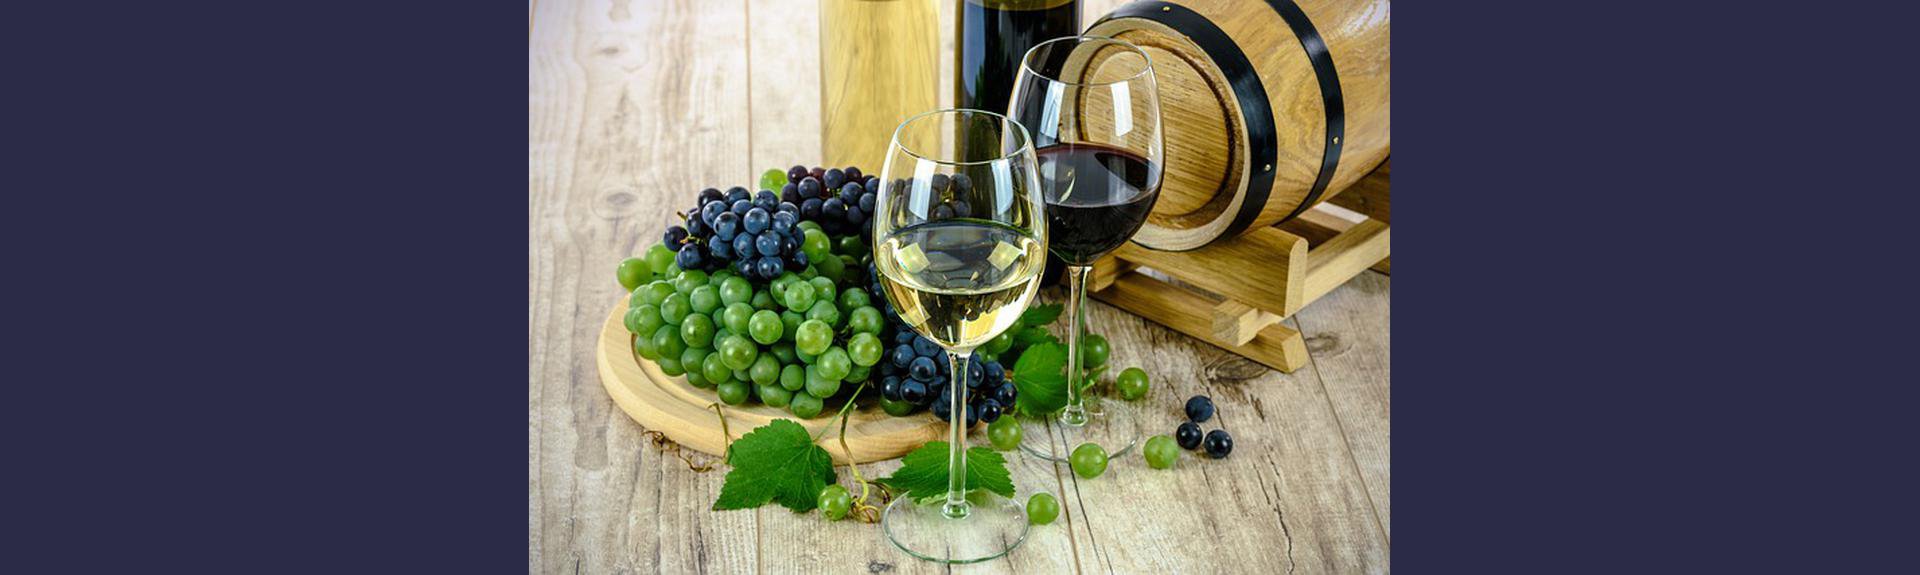 Paul Cluver Wines | Elgin | Wine Estate